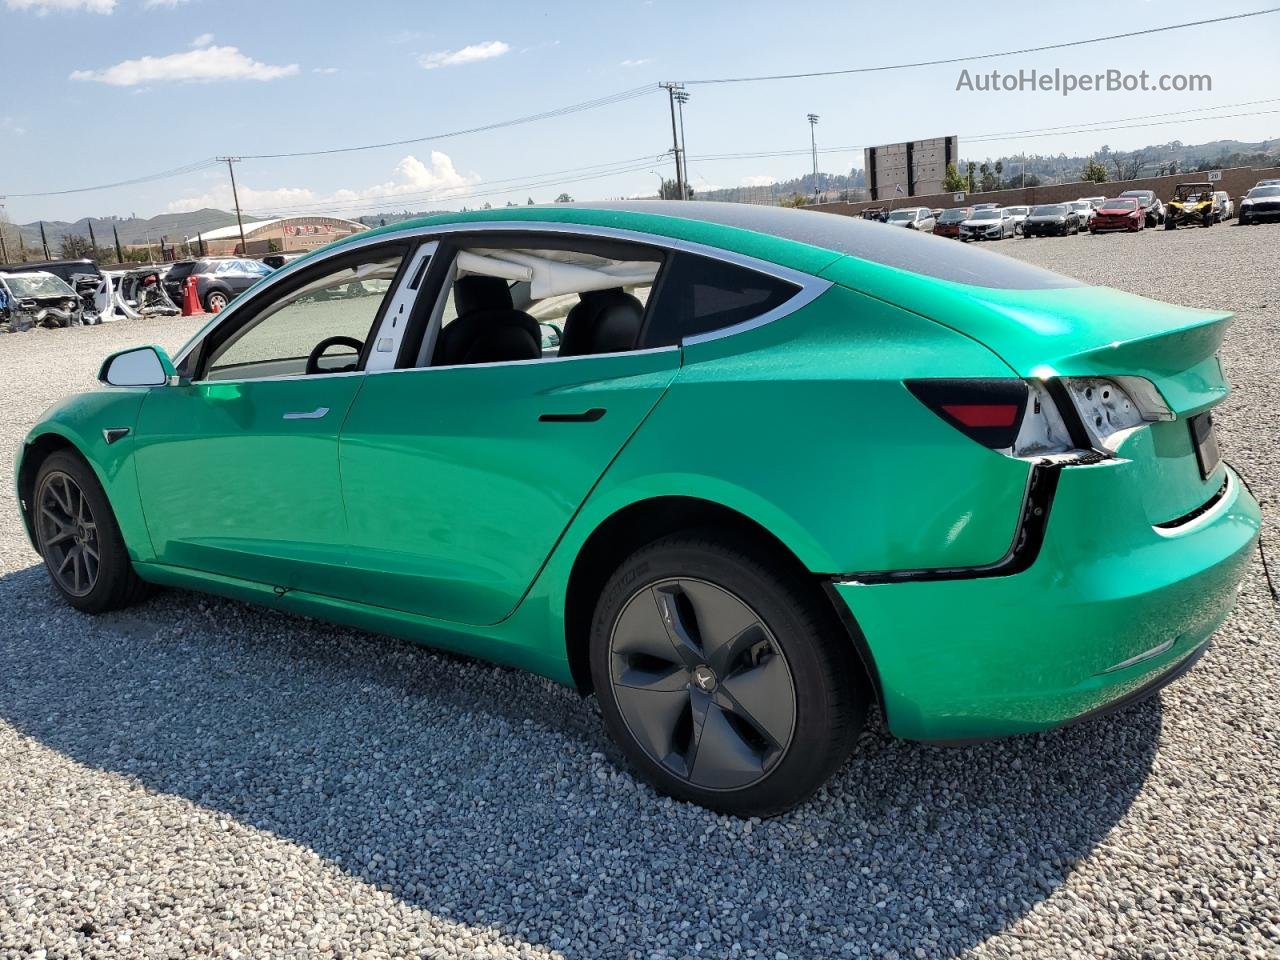 2019 Tesla Model 3  Зеленый vin: 5YJ3E1EA8KF482842